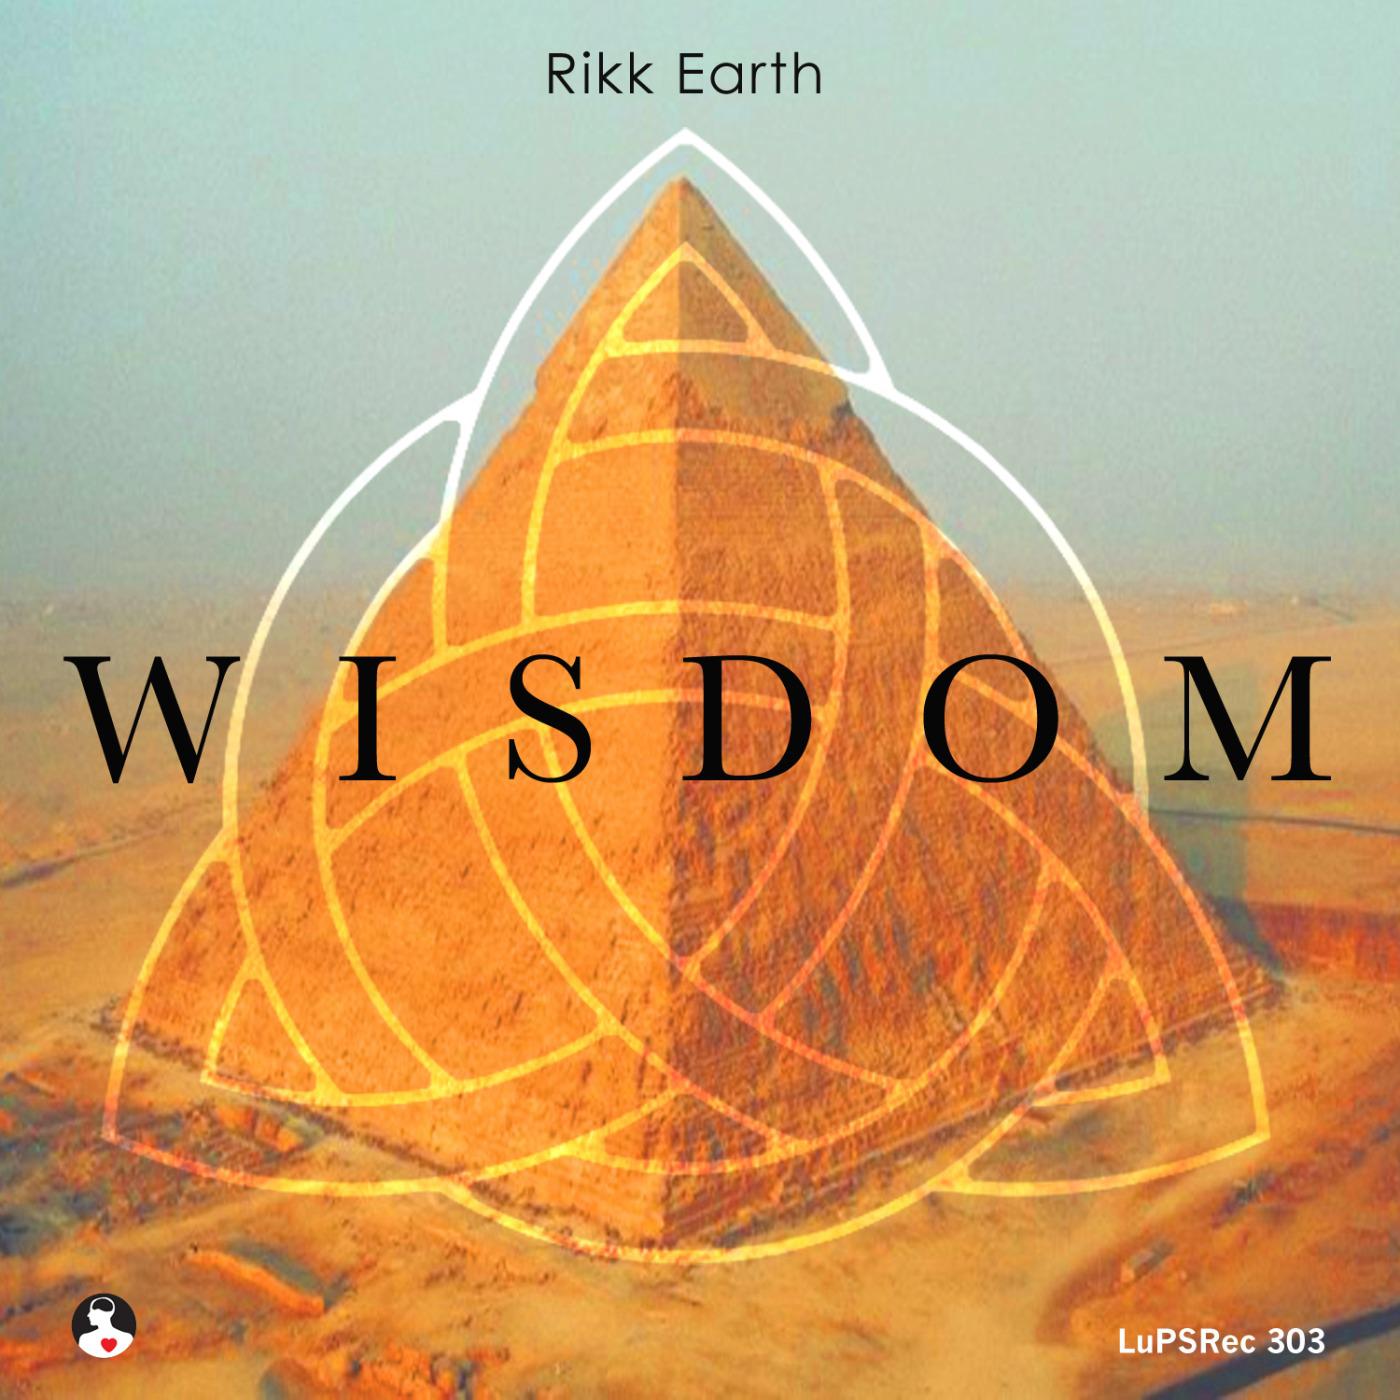 Rikk Earth - Wisdom (Original)